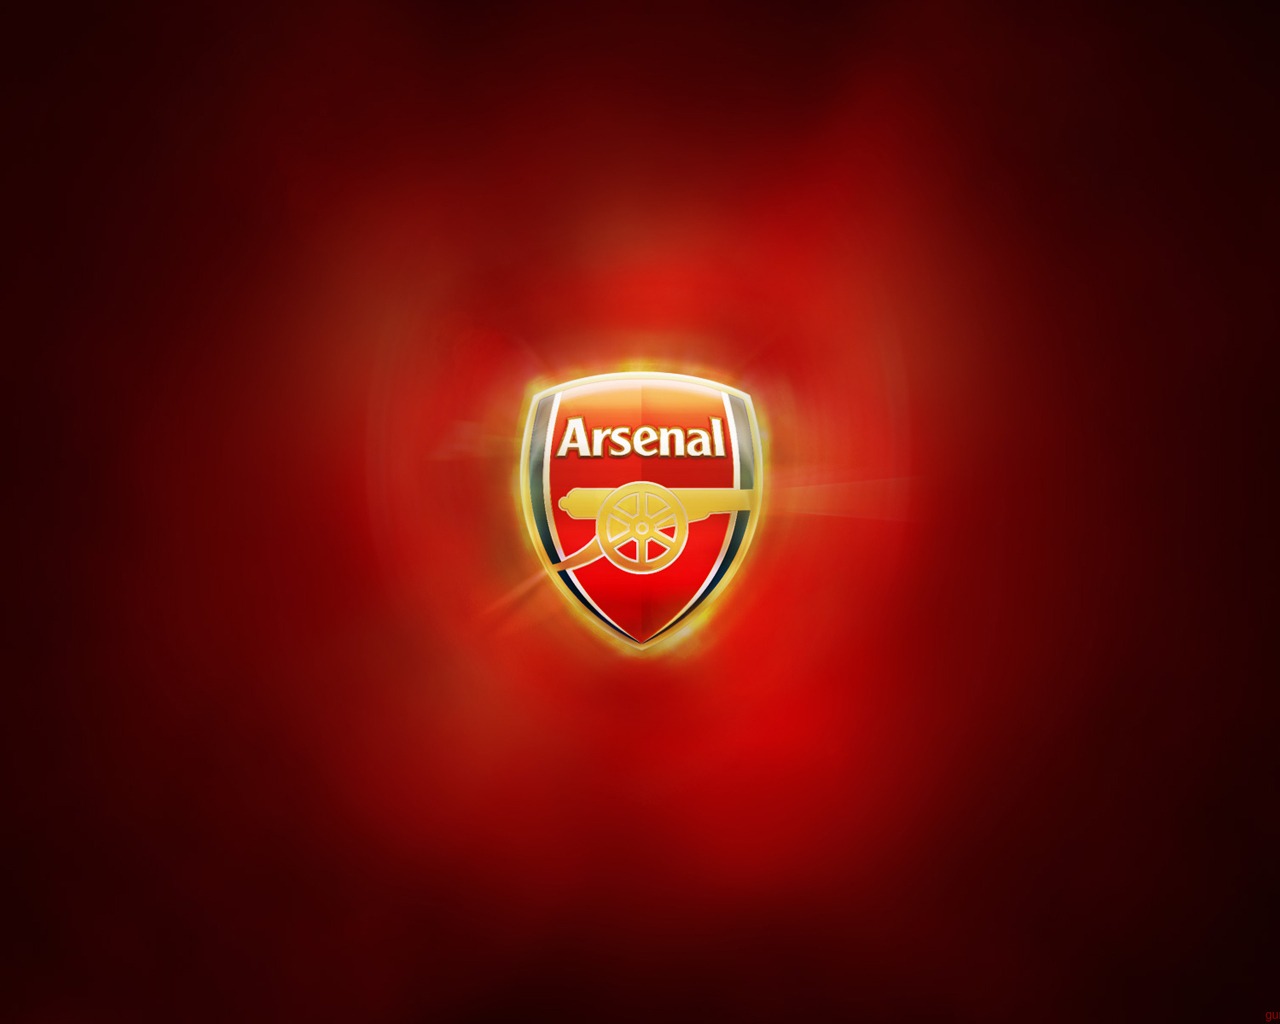 Arsenal Wallpaper Fc Sports In Jpg Format For